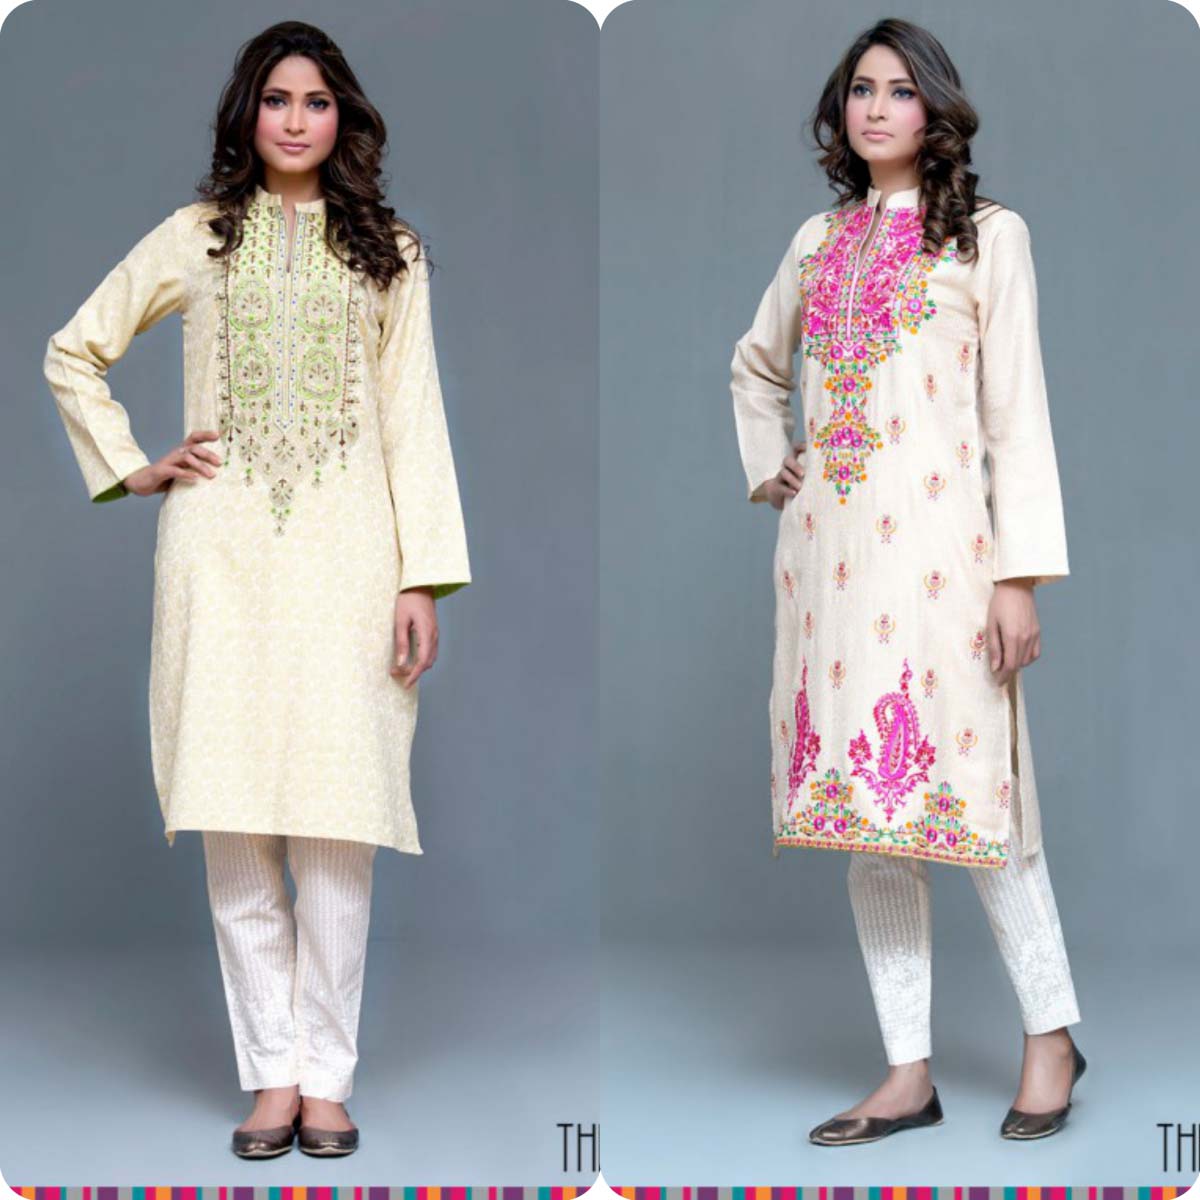 Stylish Embroidered Eid KurtisTunics for Girls By THREDZ 2016-2016 Complete Look-Book (2)